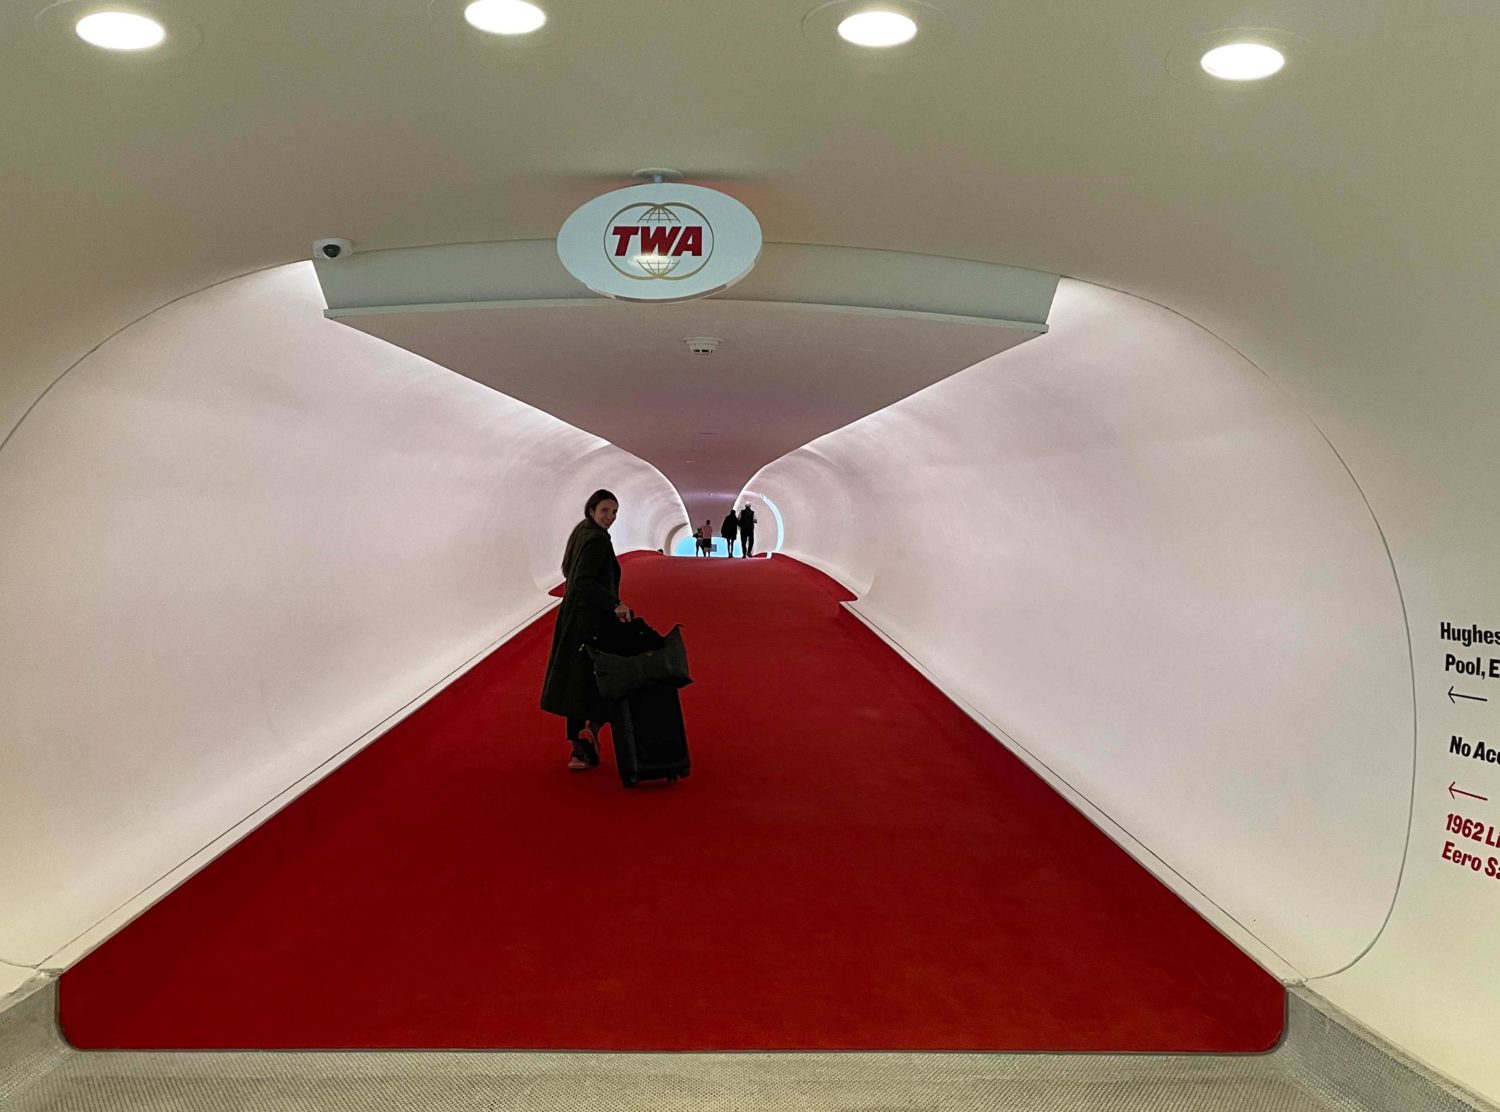 TWA Hotel Red carpet and retro futuristic lines everywhere